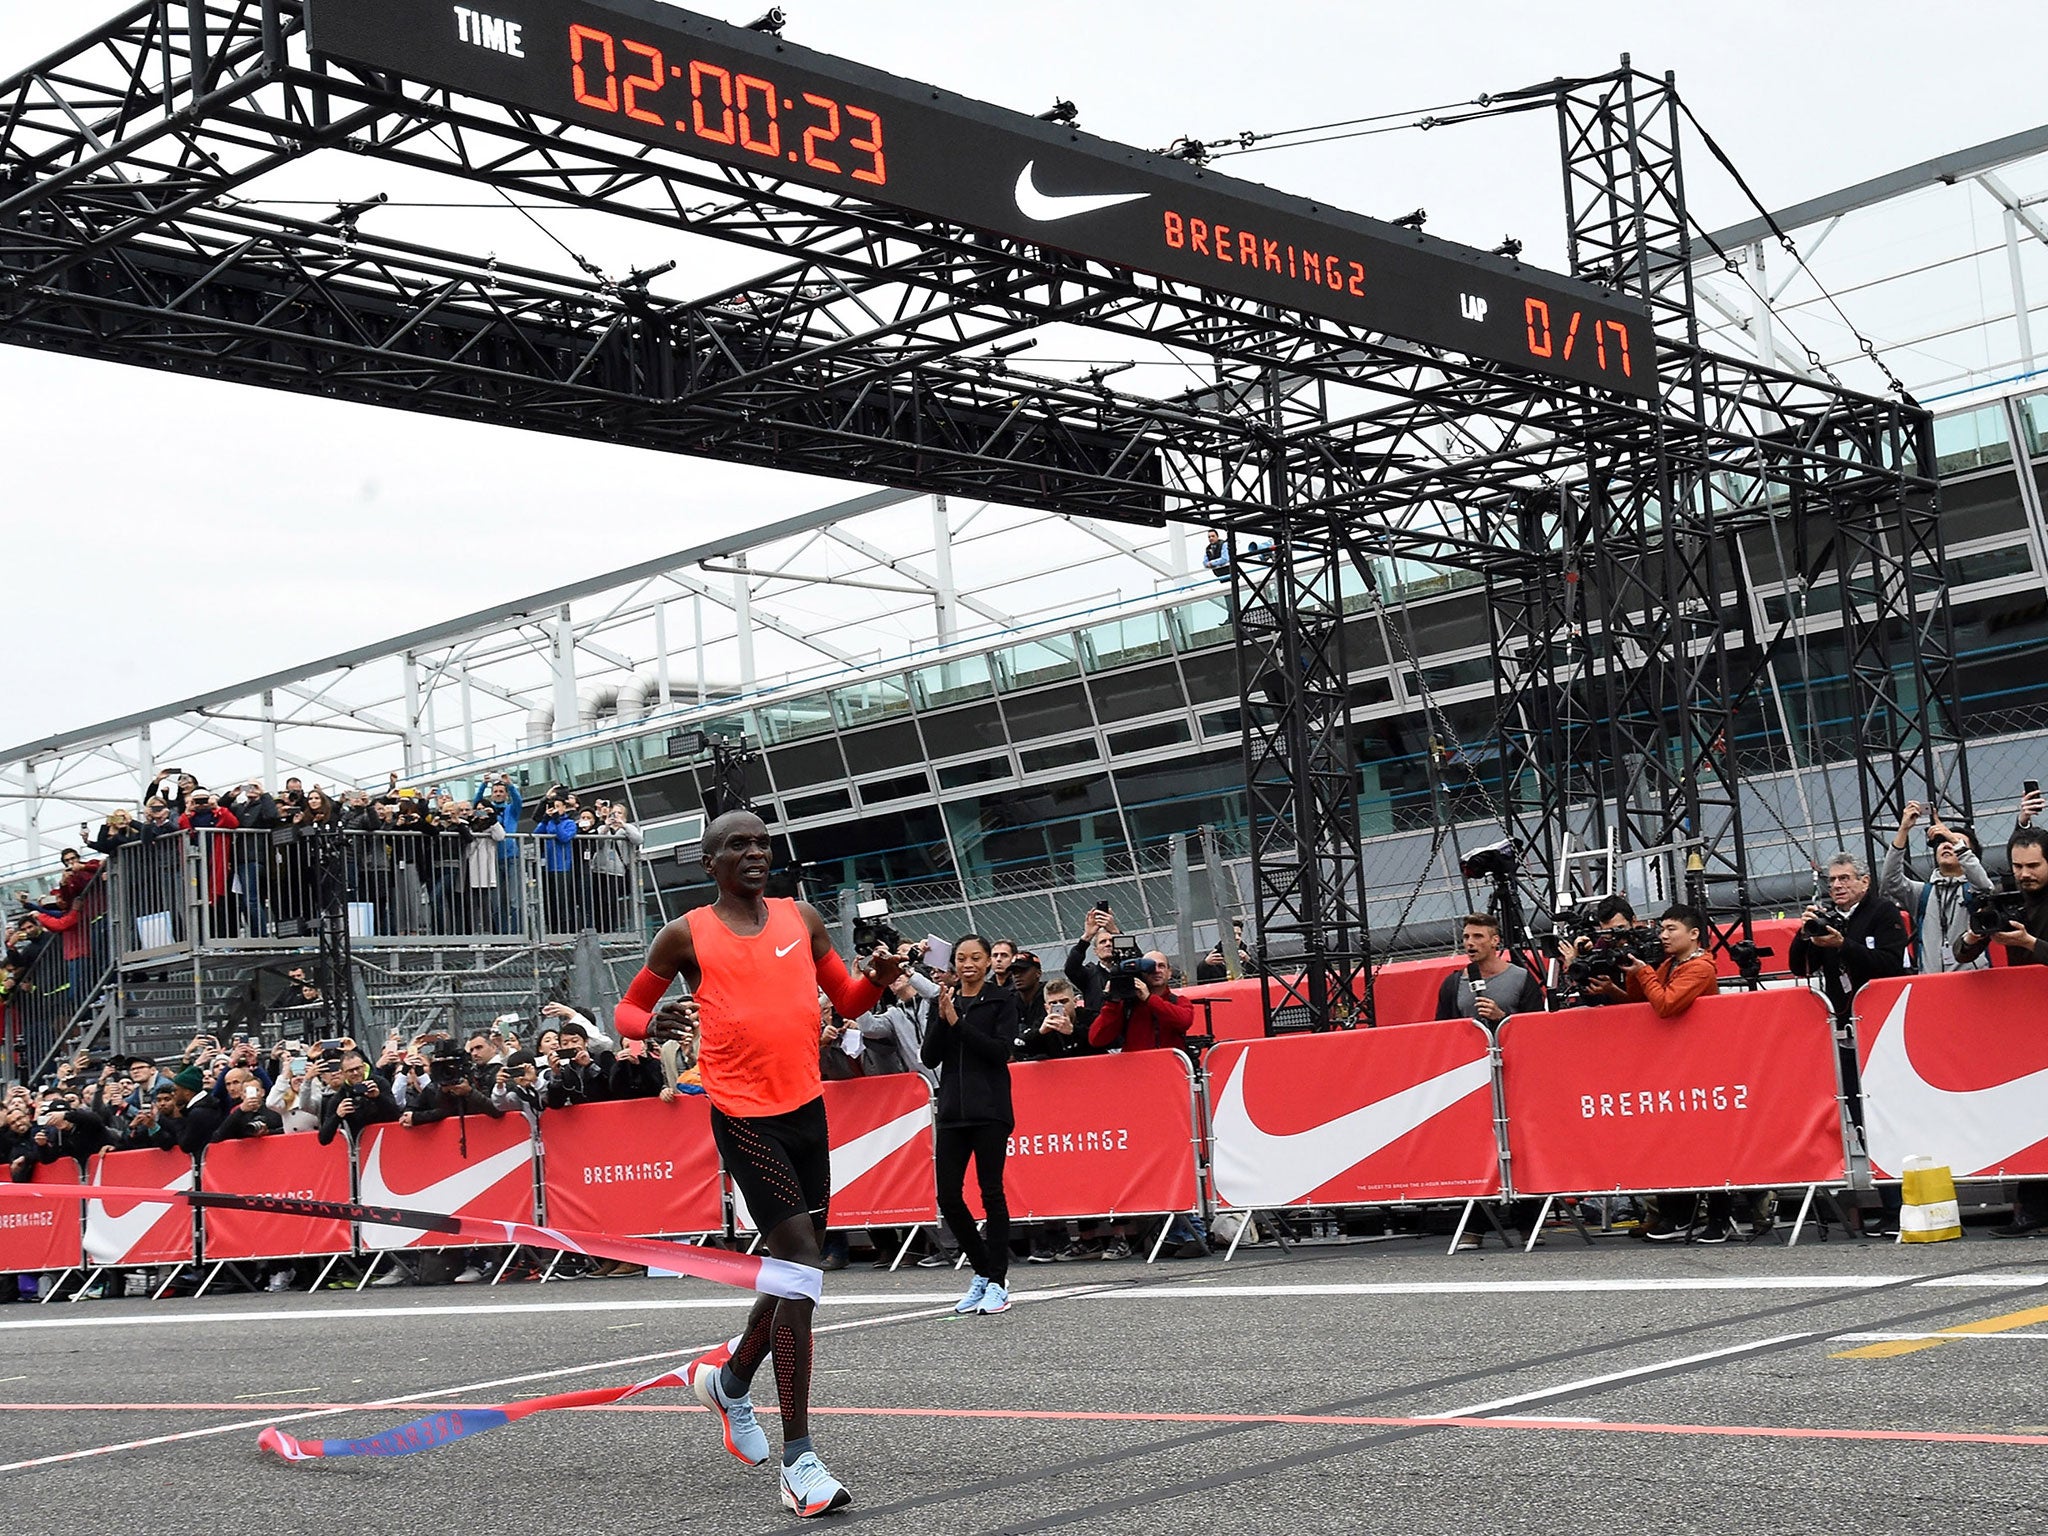 Verbeteren paniek premier Eliud Kipchoge runs fastest ever marathon but doesn't break world record  during Nike Breaking2 race | The Independent | The Independent